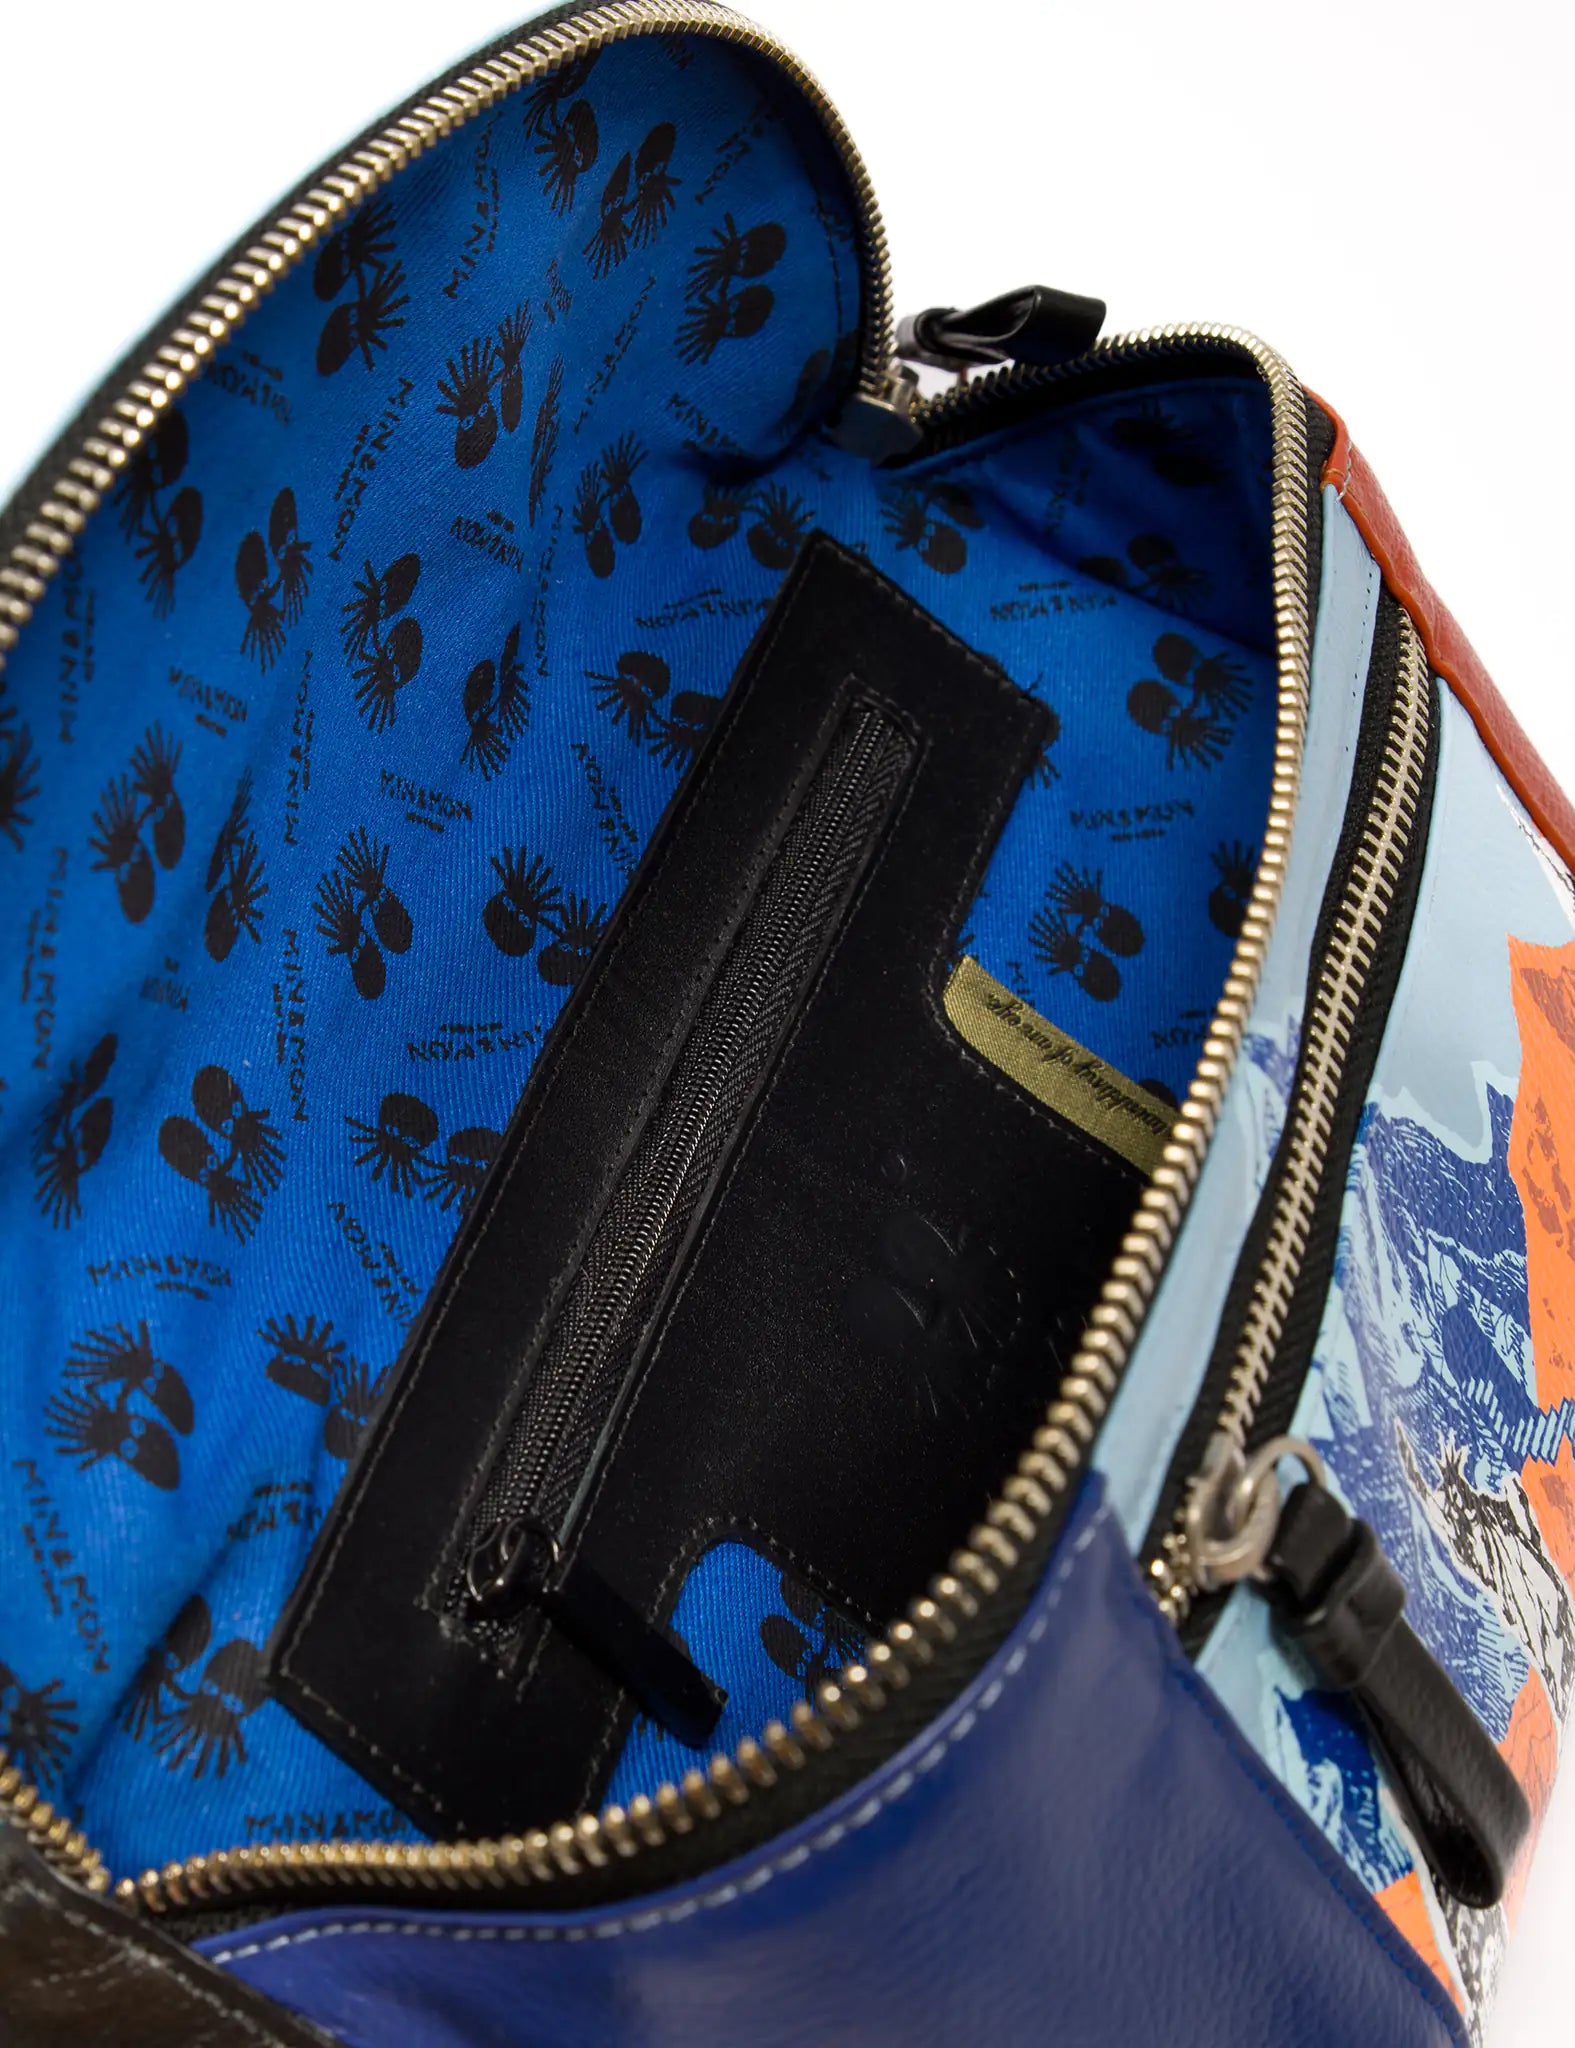 Bag Fanny Pack Royal Blue Leather - NYC Skyline Print - Inside